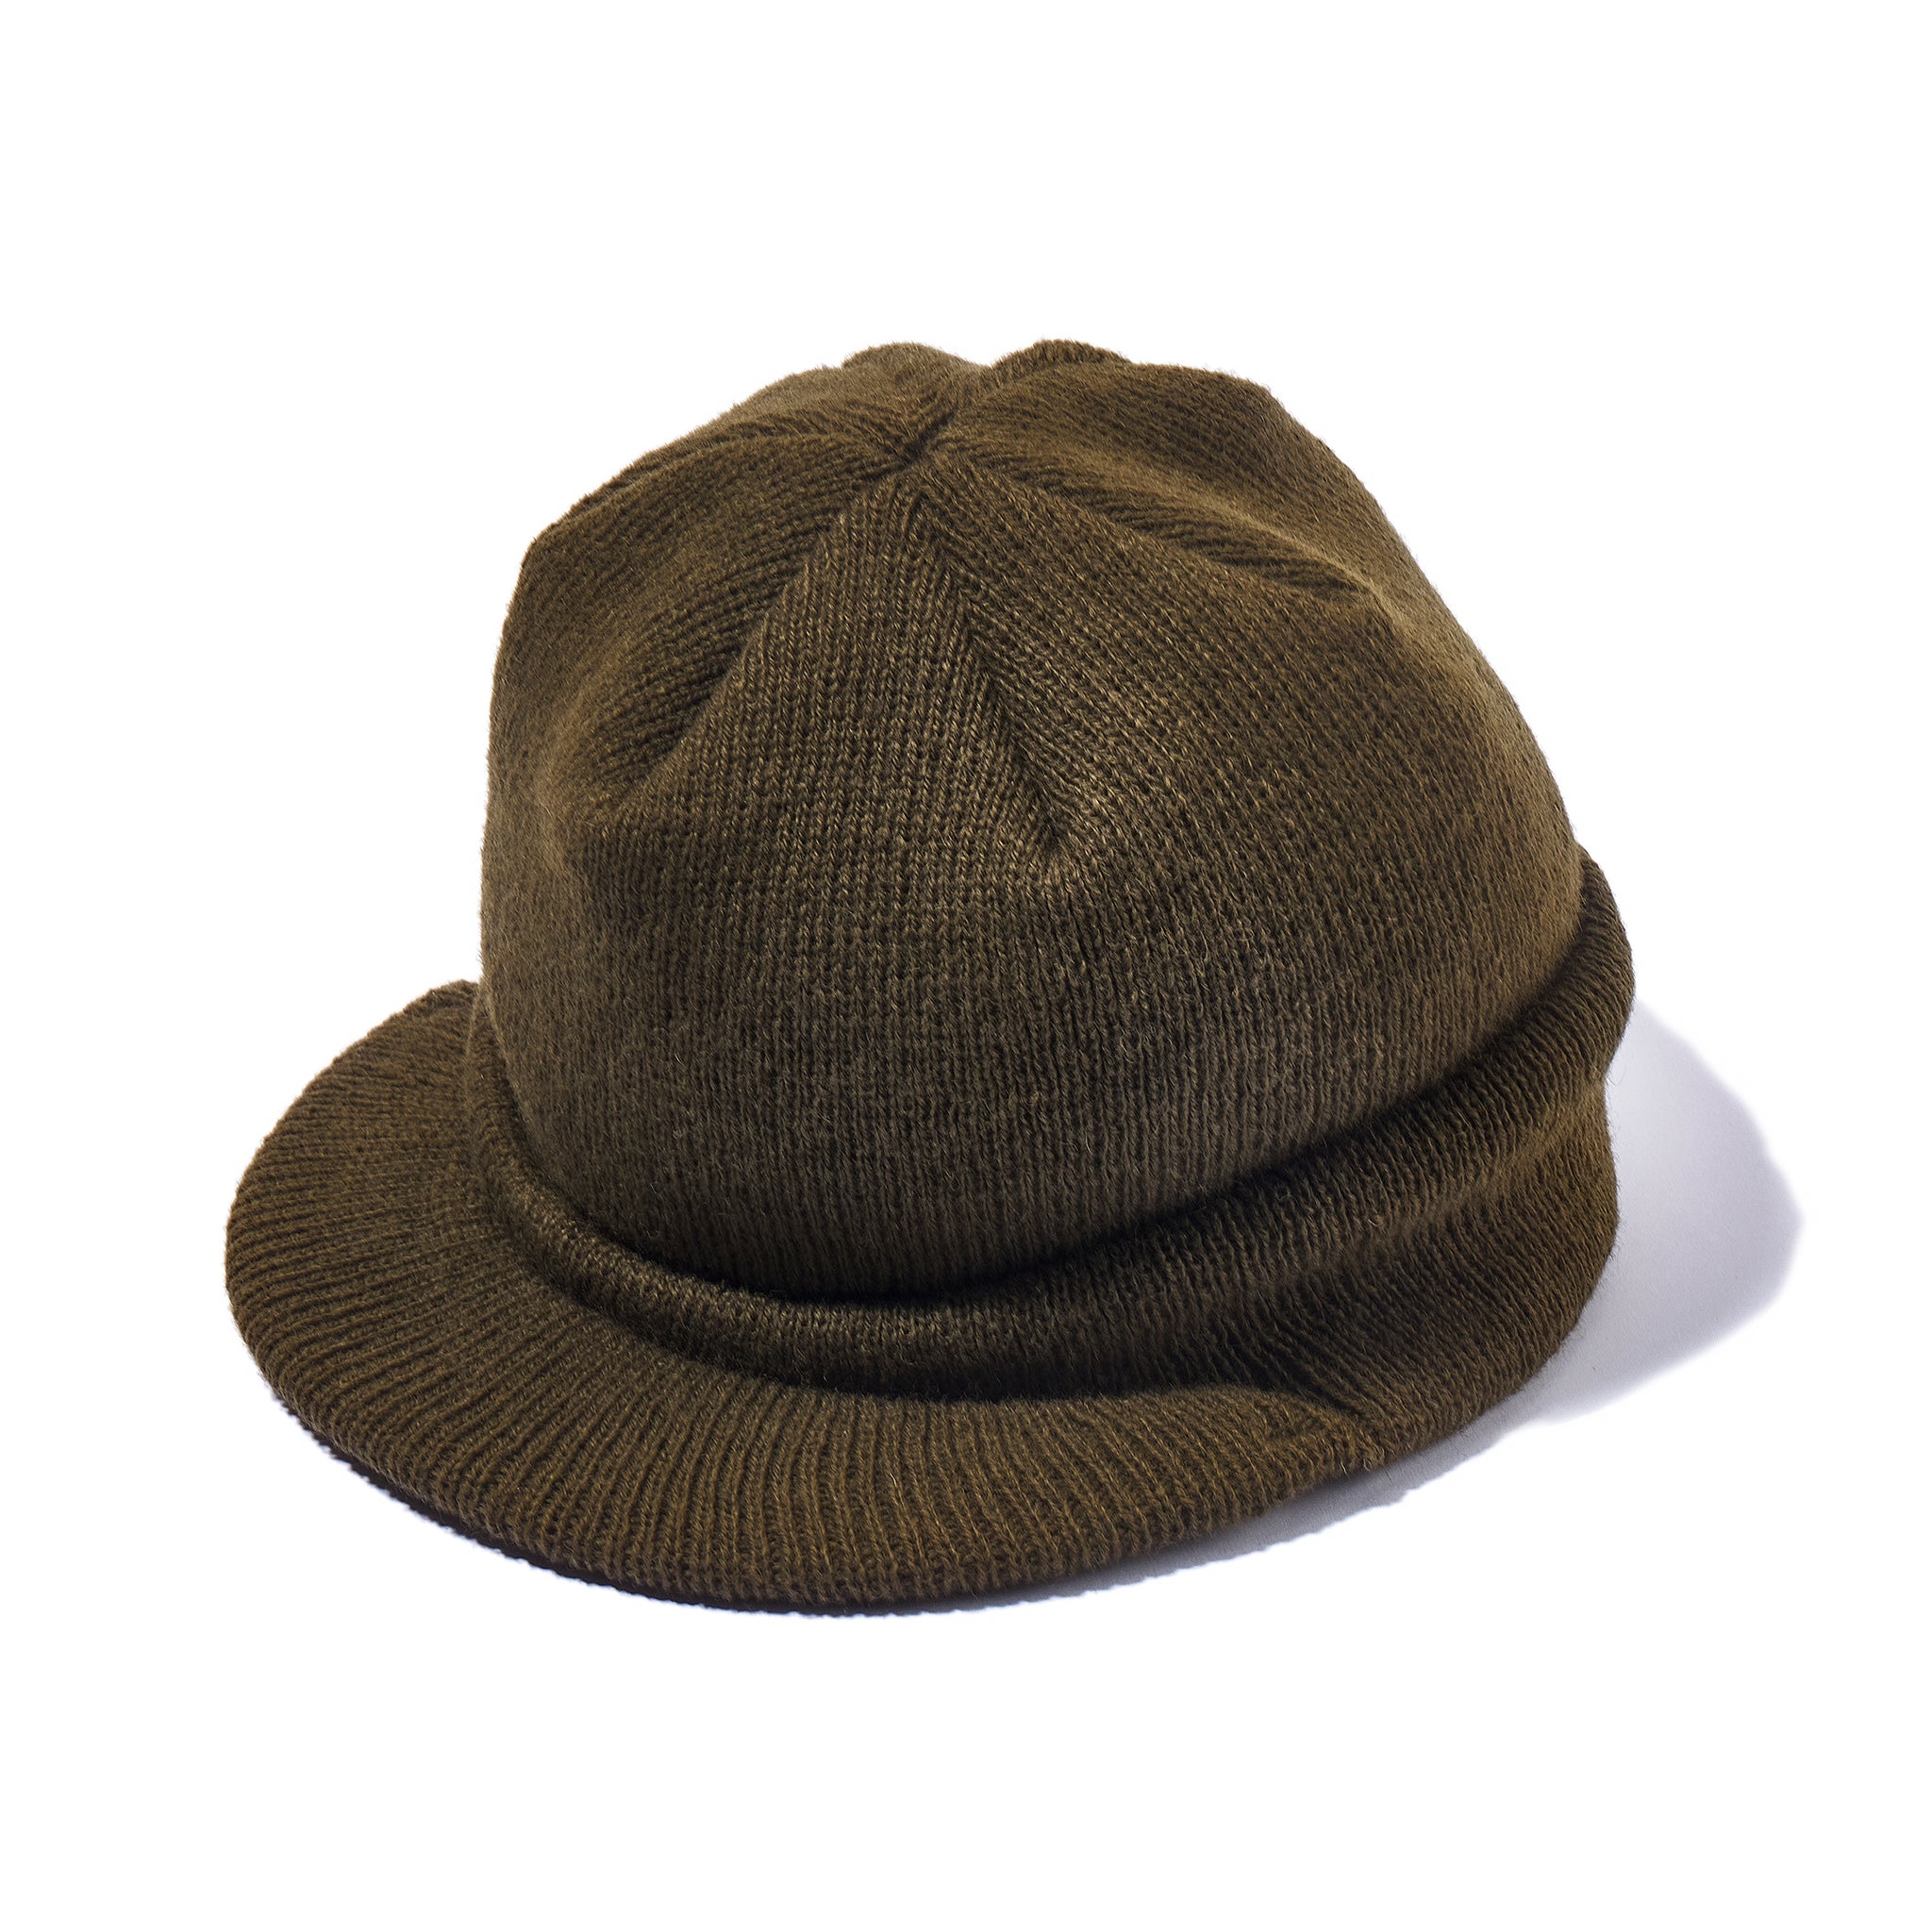 CAP, WOOL, KNIT, M-1941